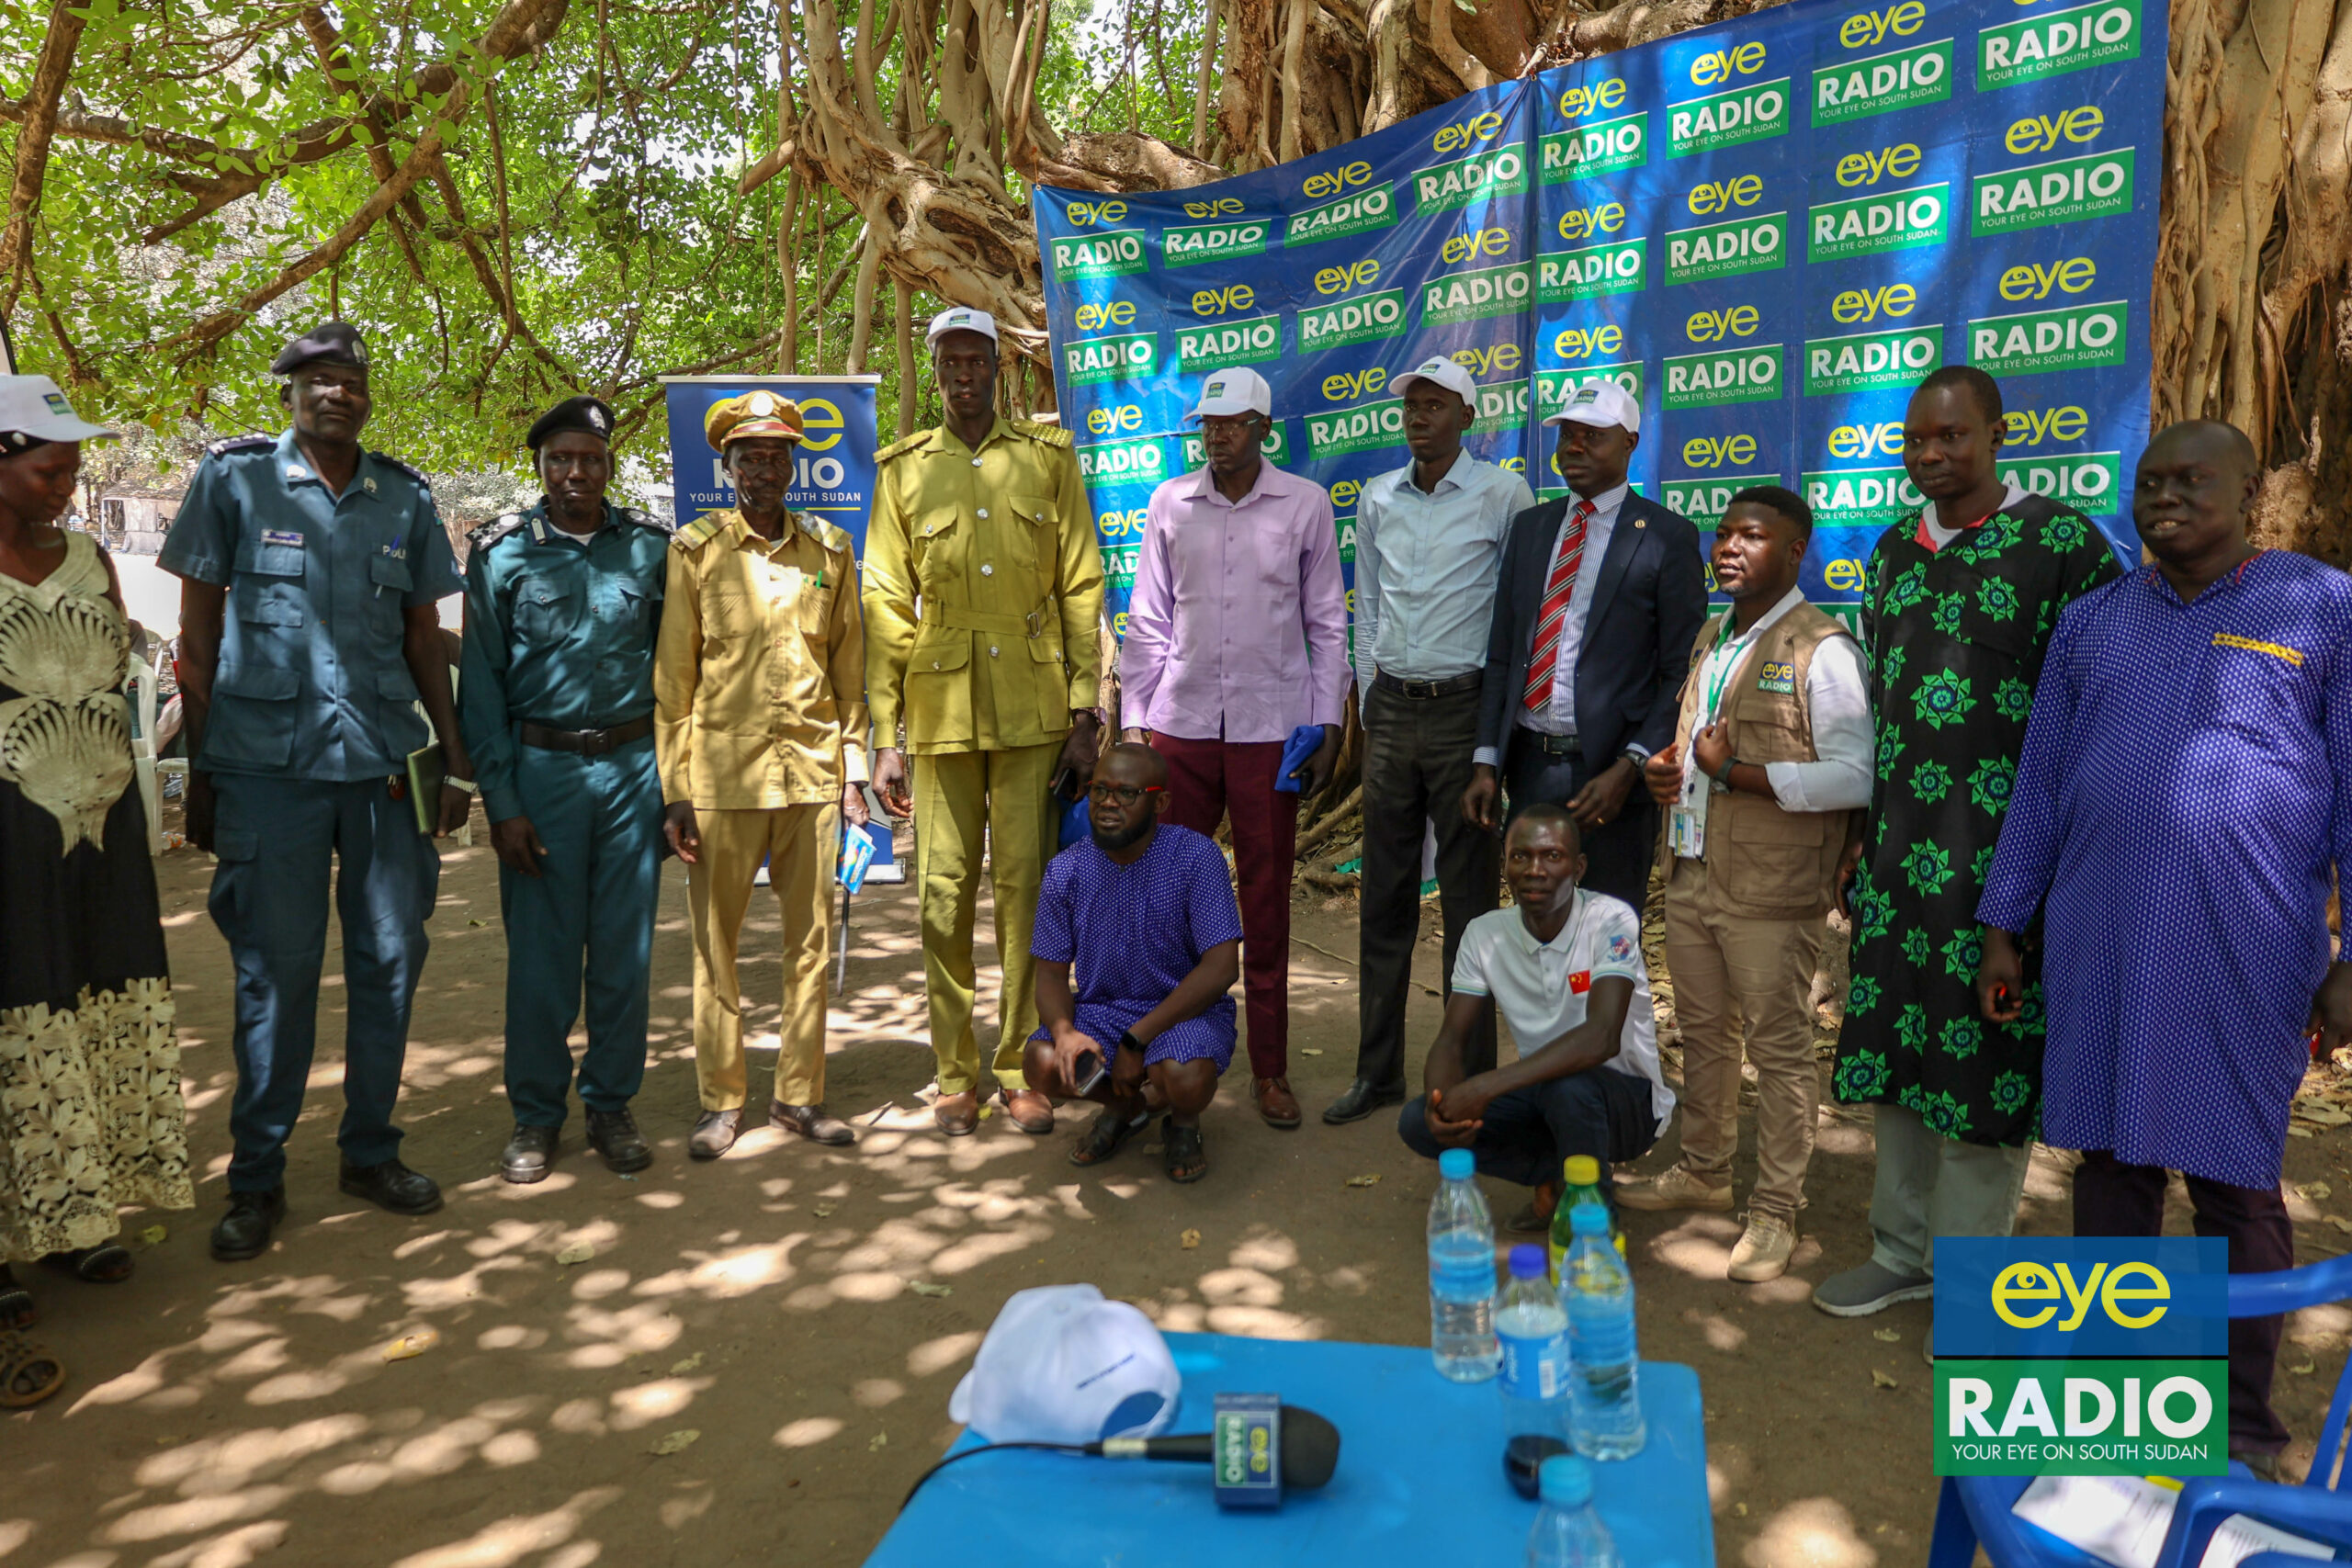 Terekeka residents ‘honored’ to host Eye Radio on World Radio Day